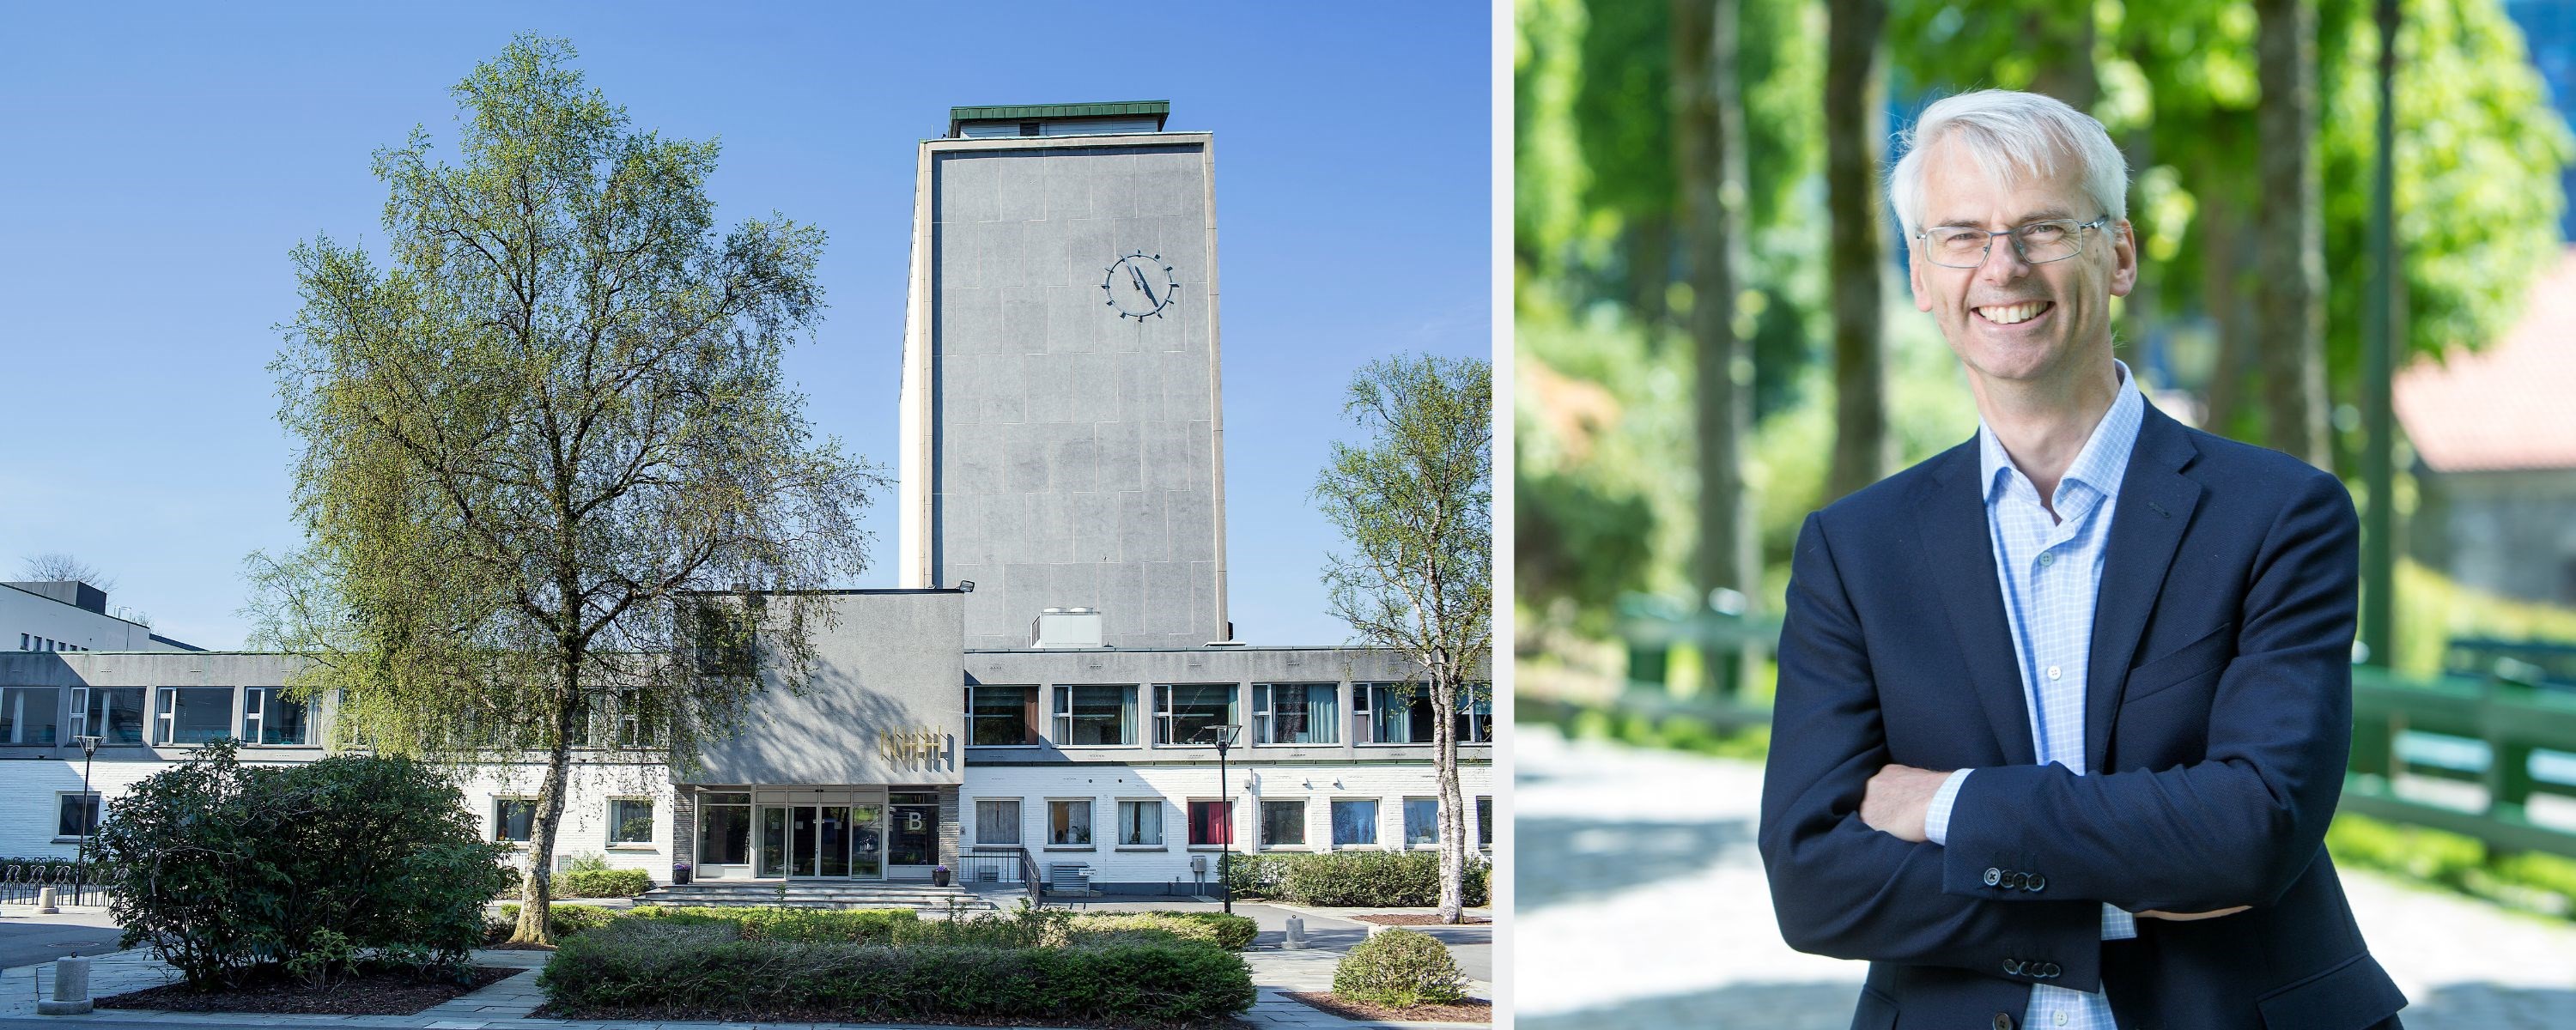 Bilde av NHH-campus og rektor Øystein Thøgersen. Foto: Silje Katrine Robinson og Eivind Senneset